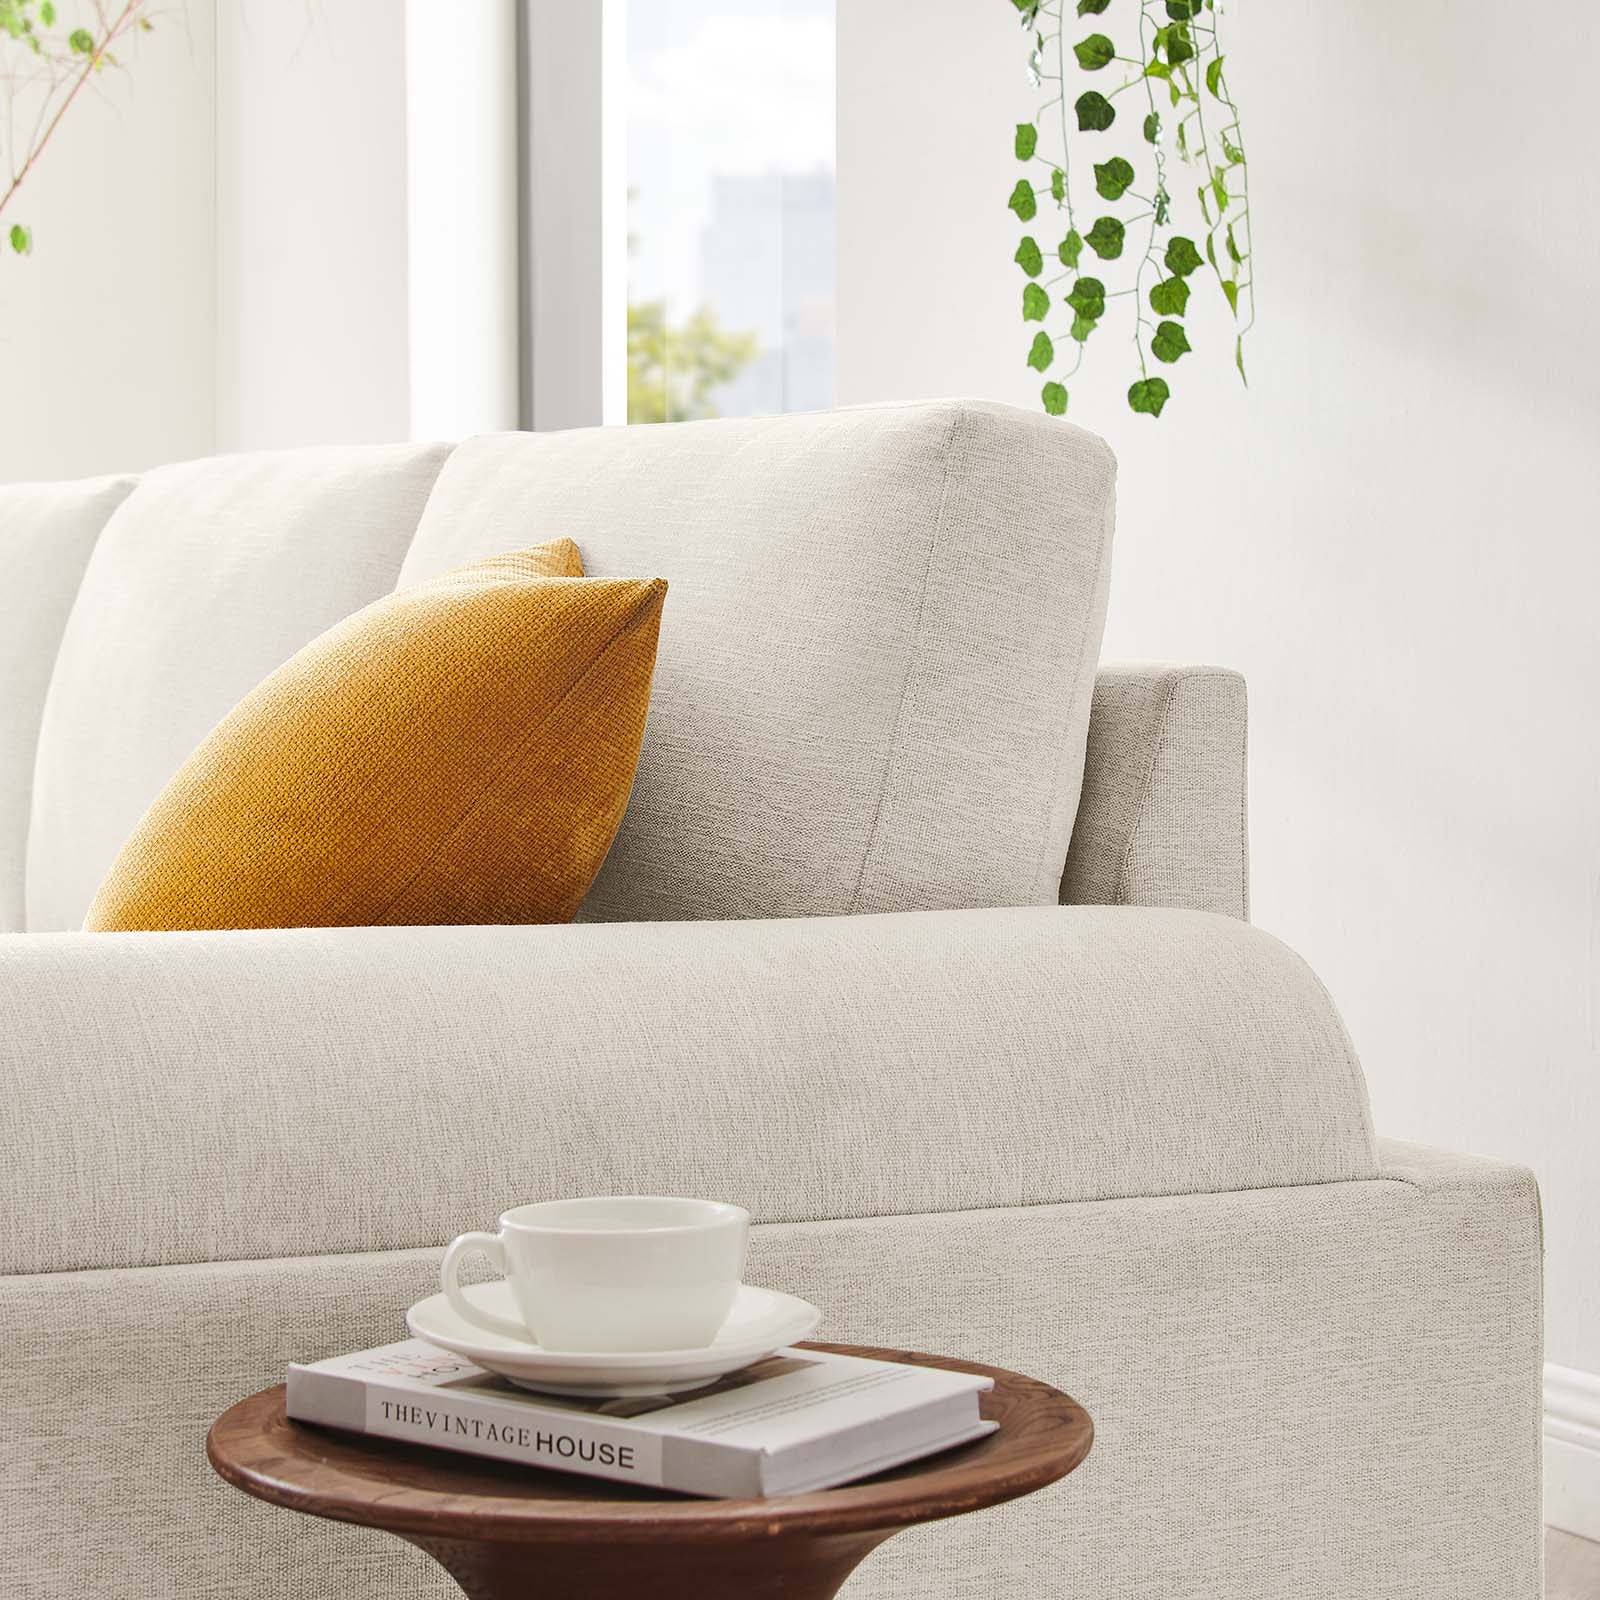 Oasis Upholstered Fabric Sofa-Sofa-Modway-Wall2Wall Furnishings